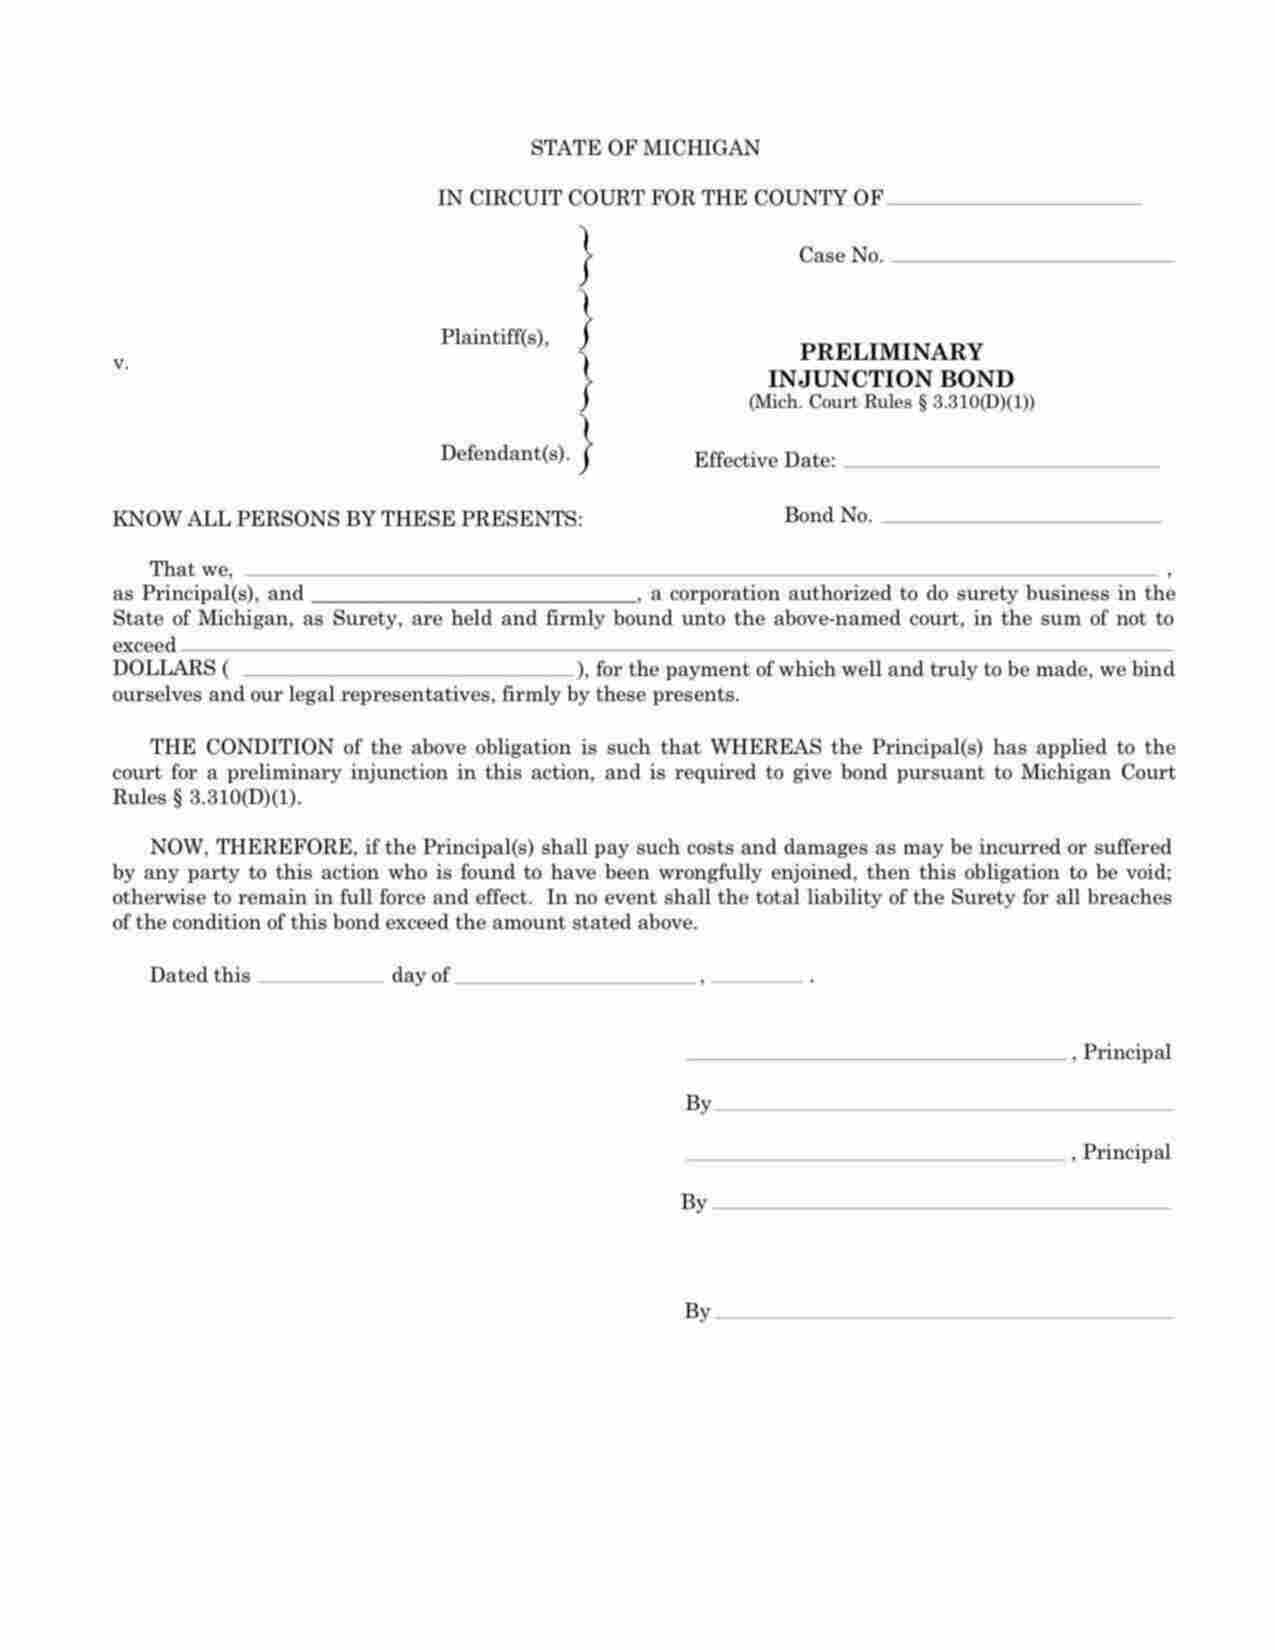 Michigan Preliminary Injunction Bond Form